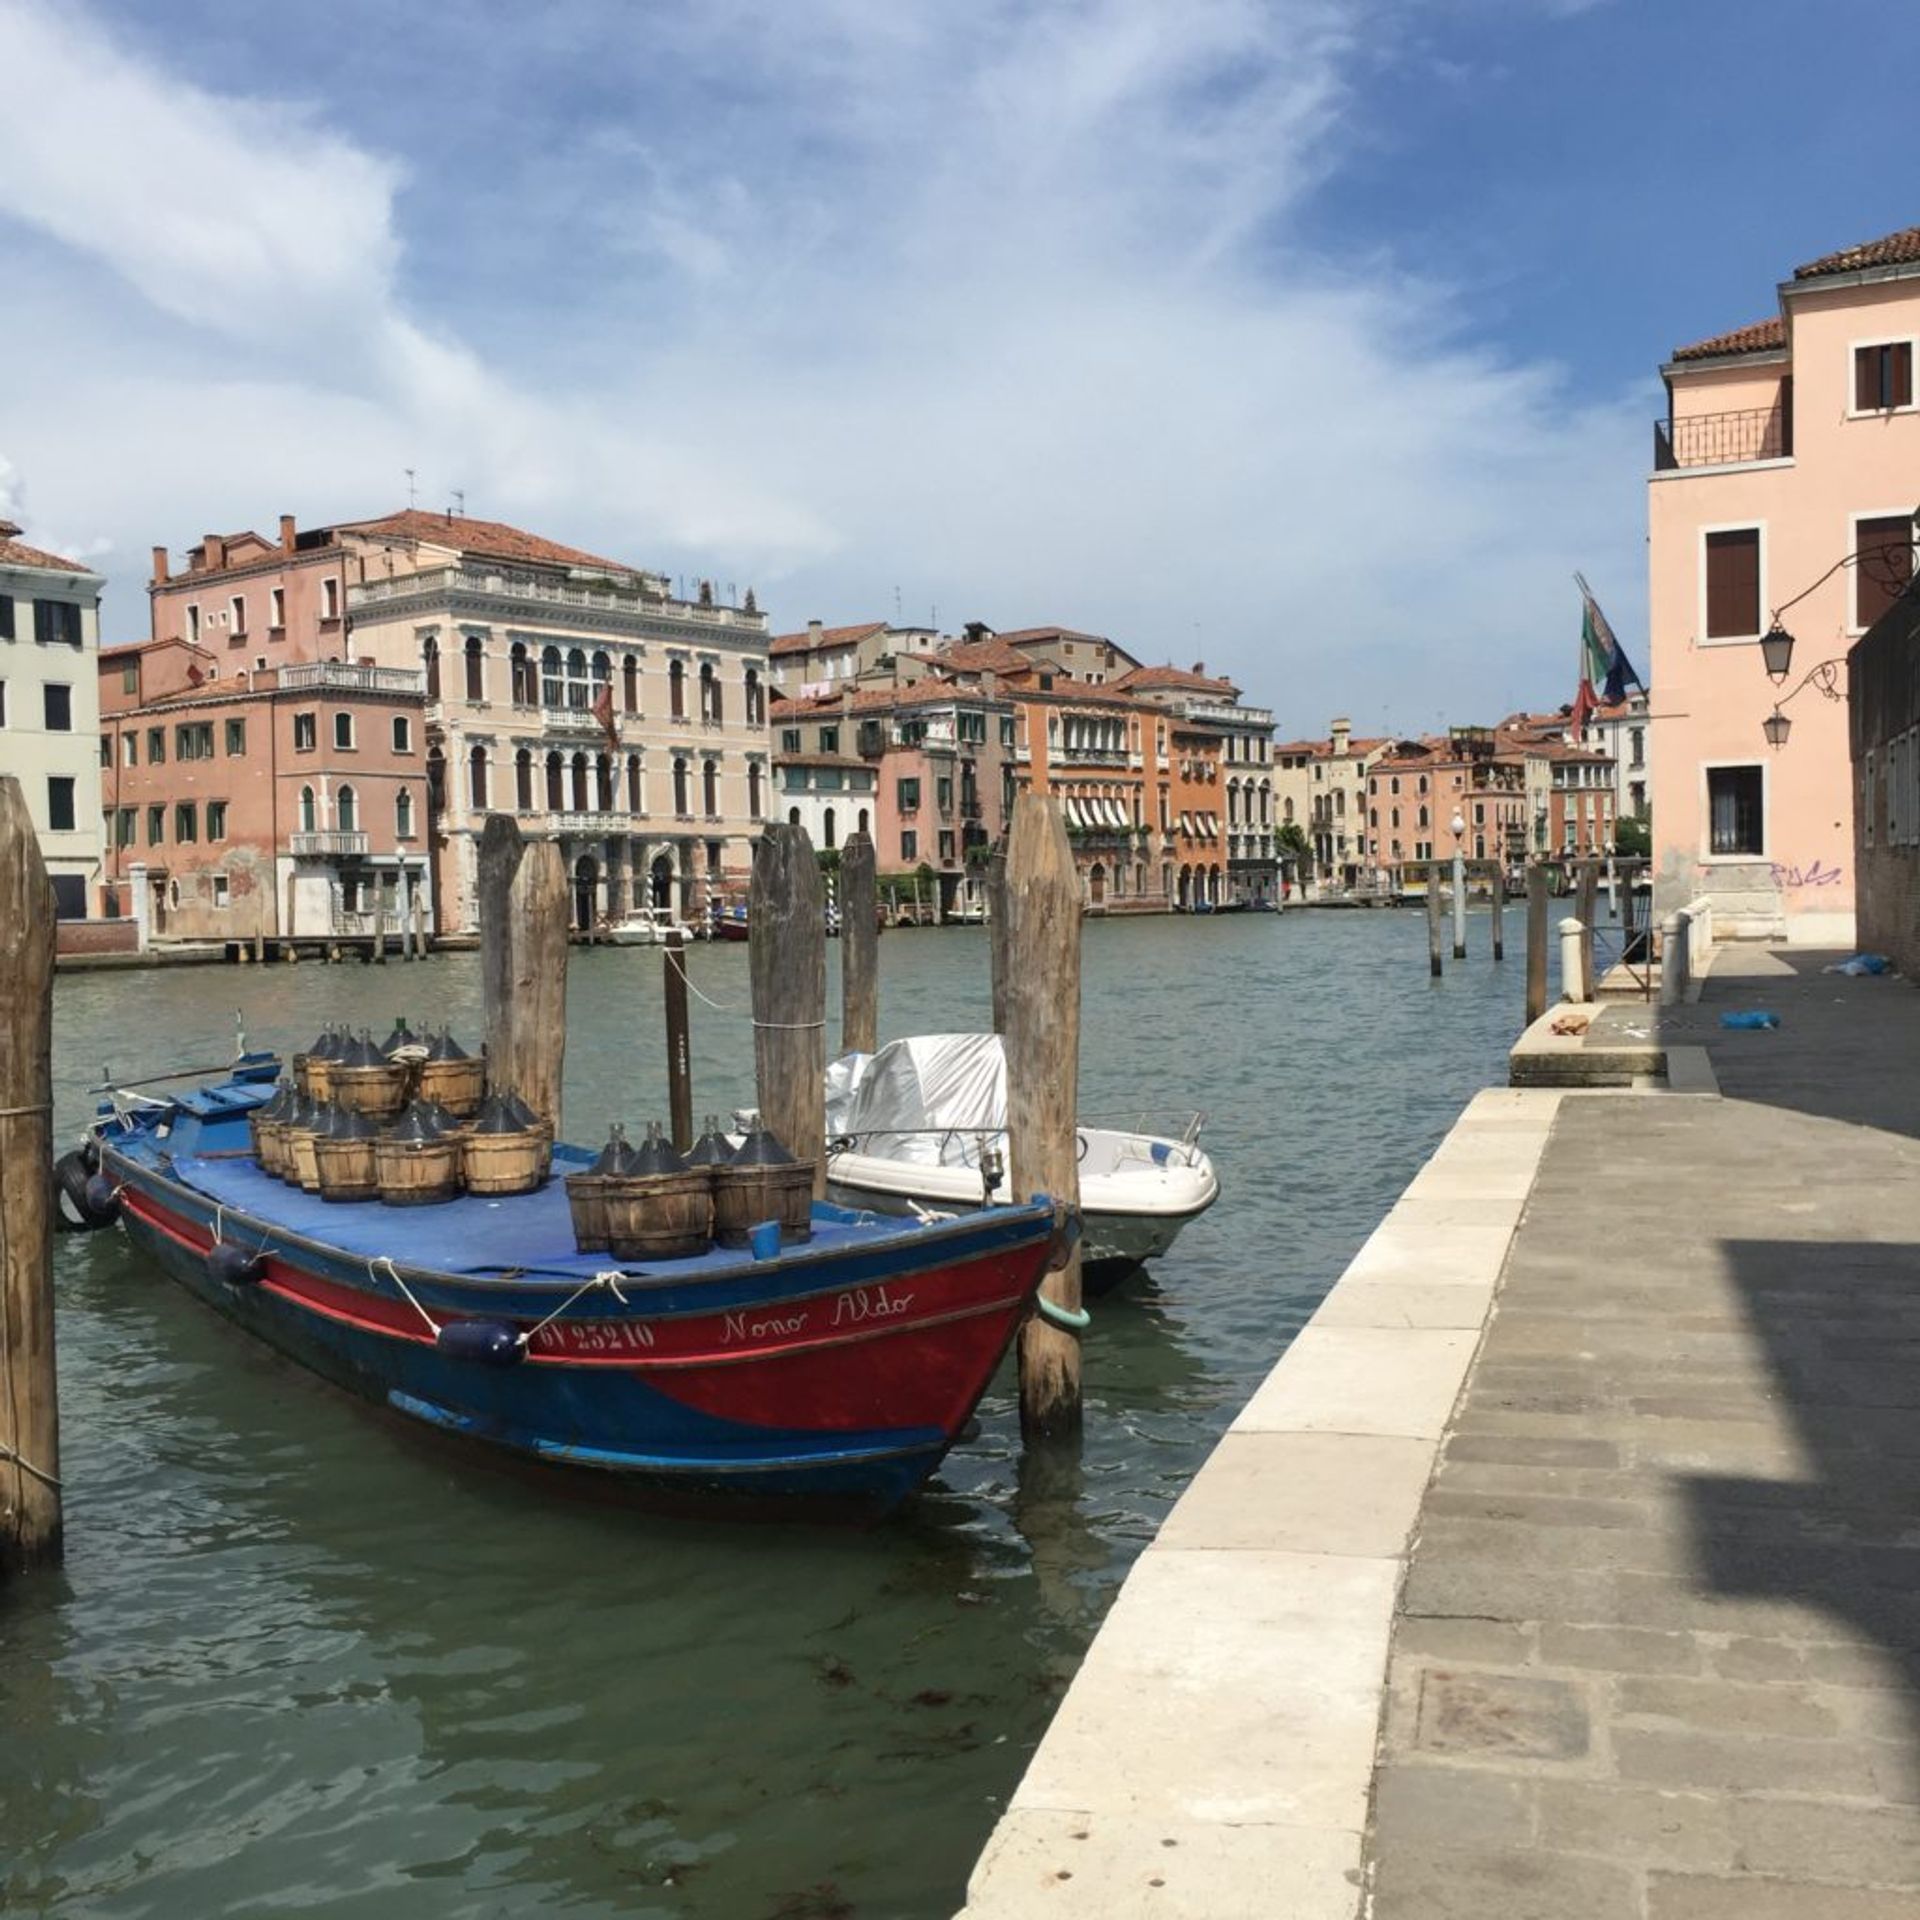 Aforementioned boat transferred barrels of wine in Venice, June 2018